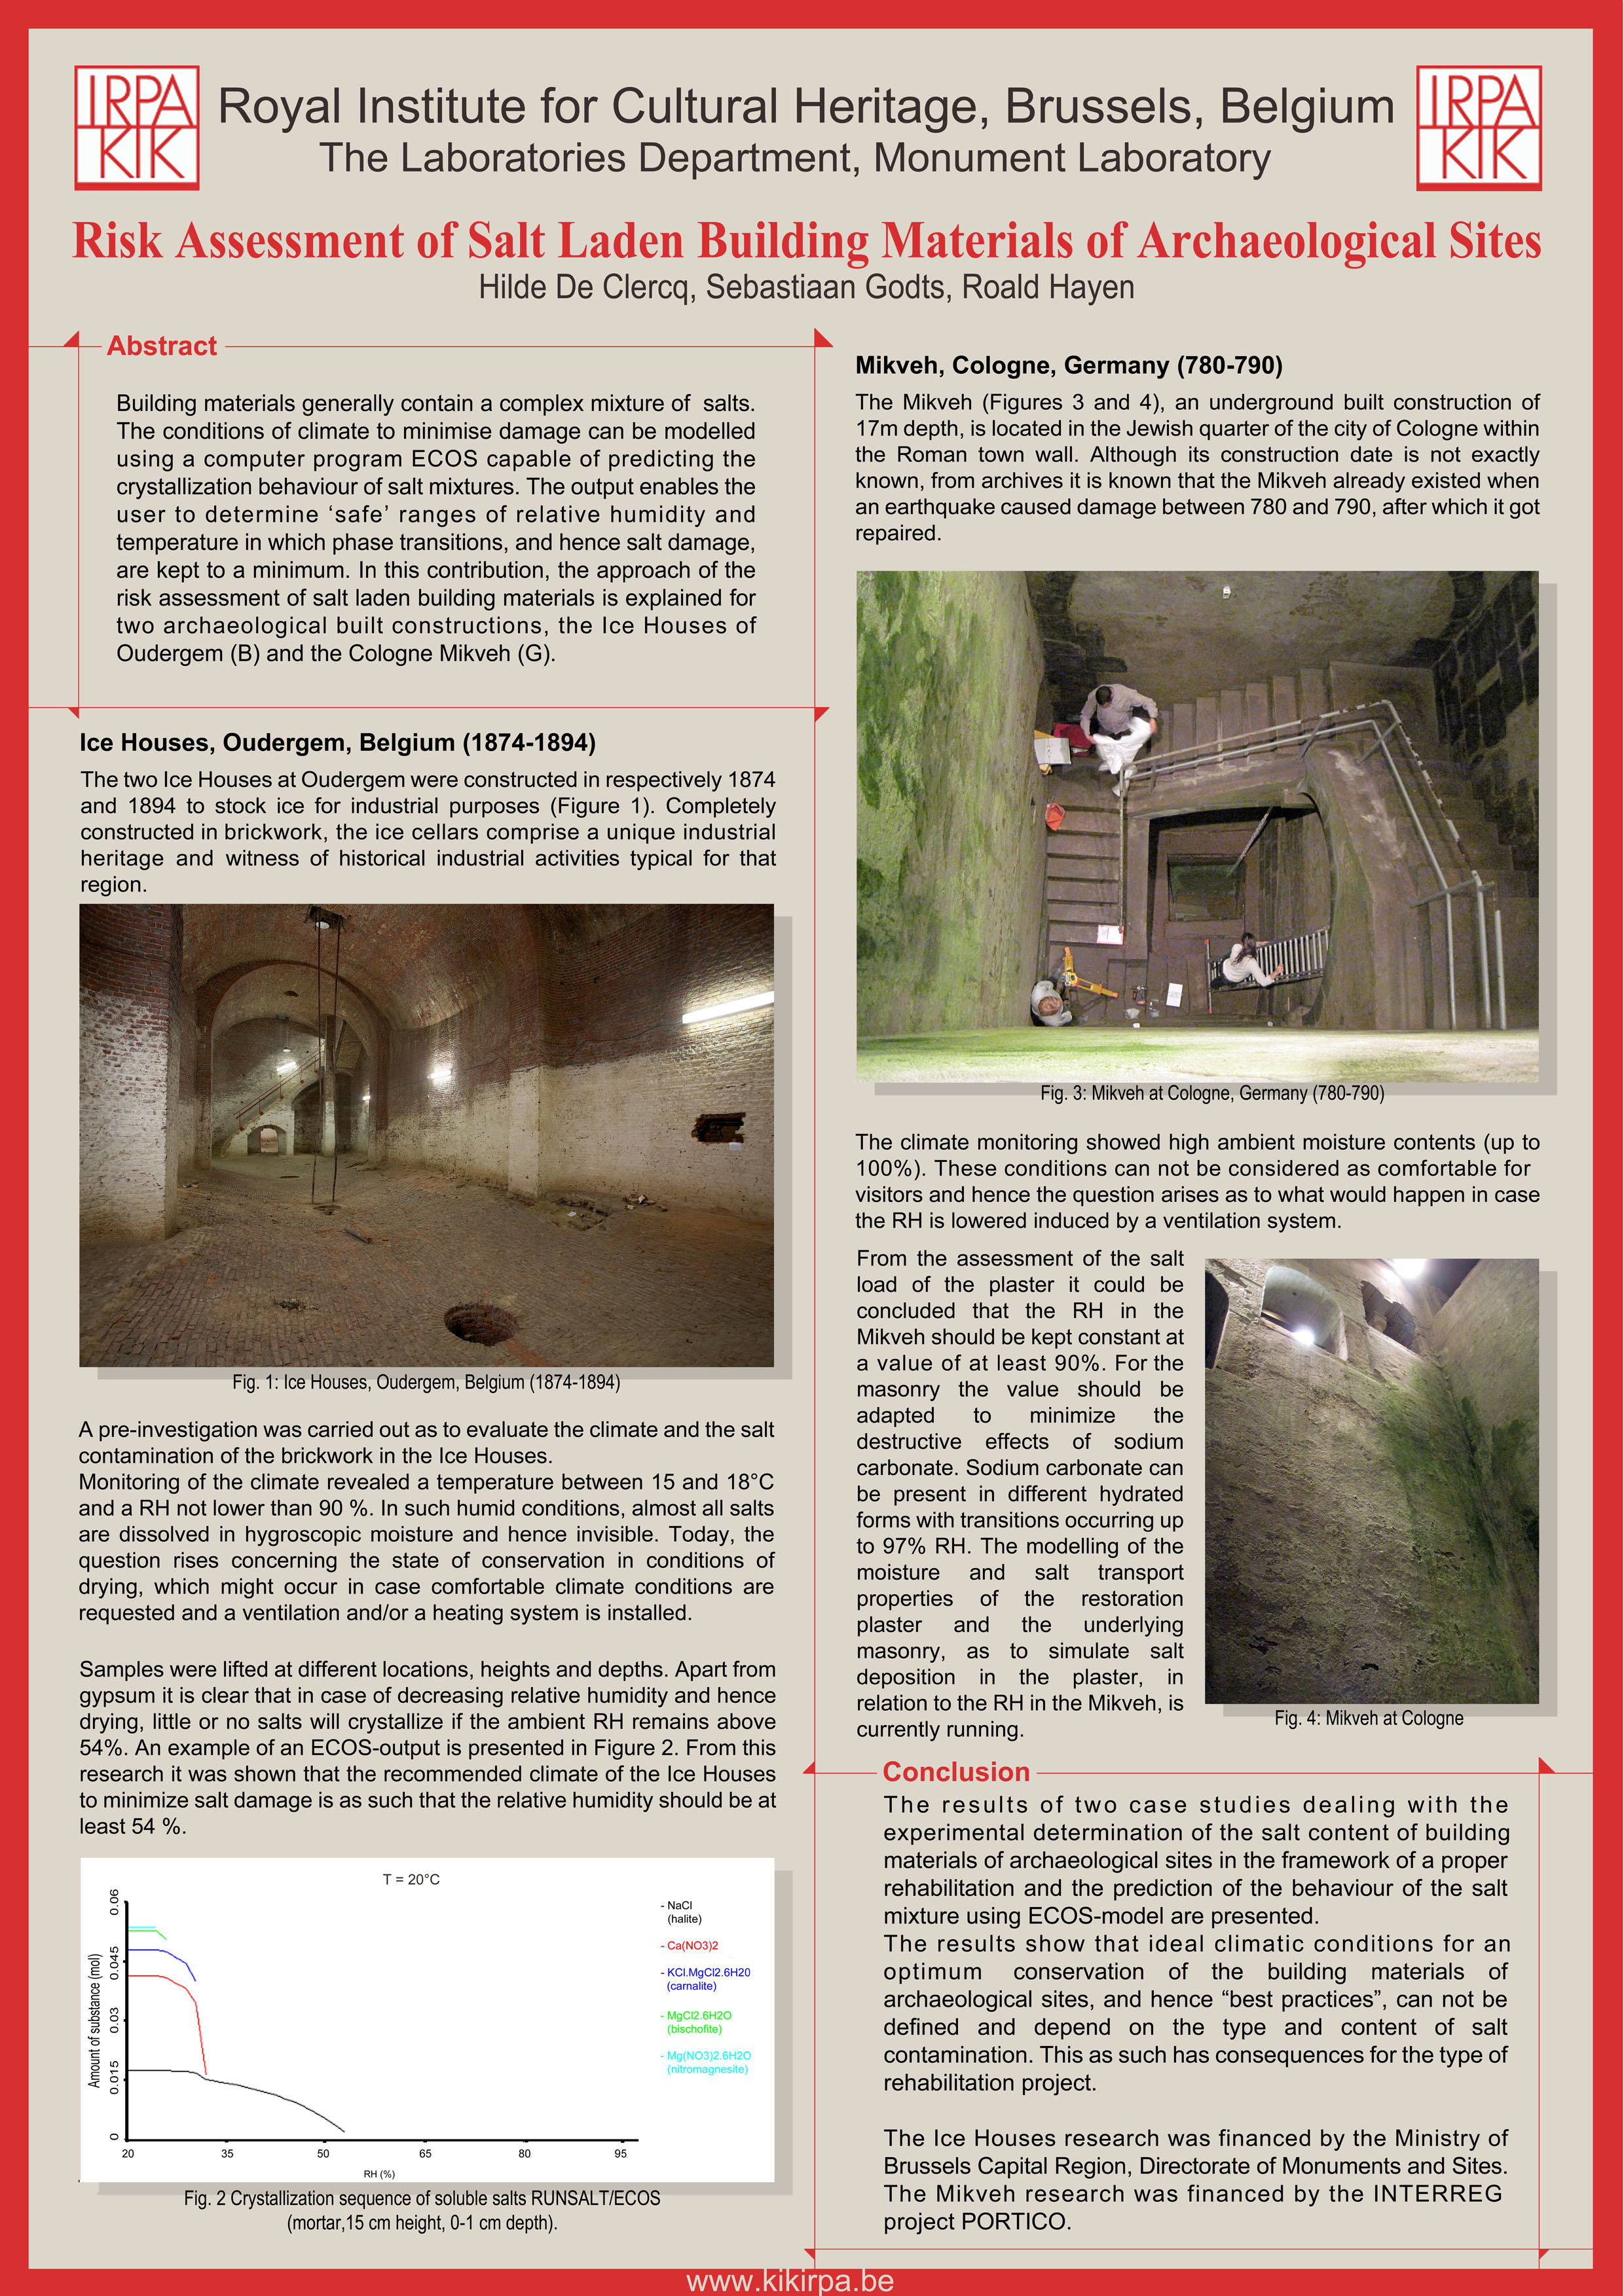 Risk Assessment of Salt Laden Building Materials of Archaeological Sites by Hilde De Clercq, Sebastiaan Franciscus Godt and Roald Hayen